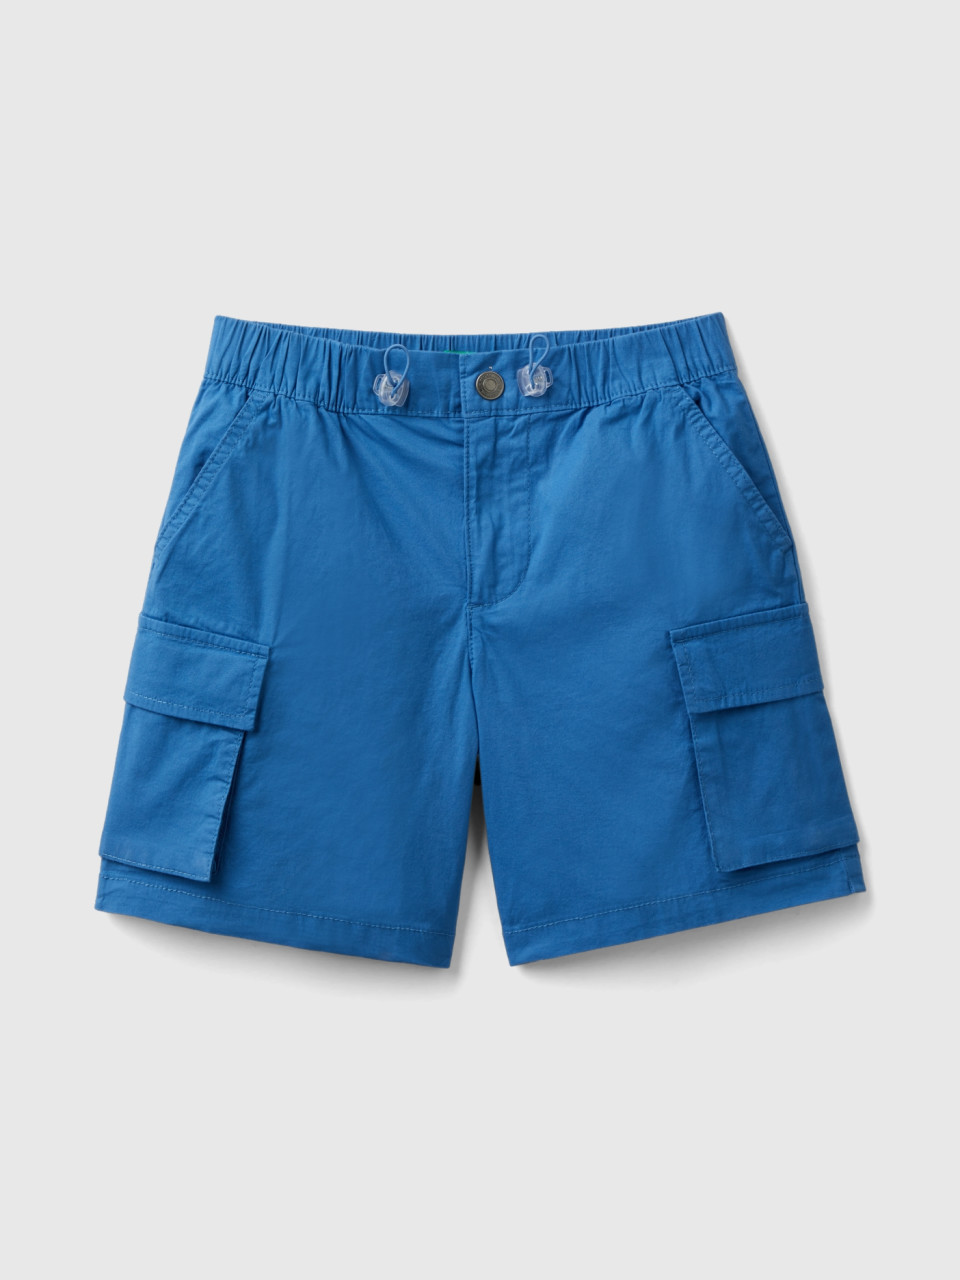 Benetton, Cargo Bermuda Shorts In Stretch Cotton, Blue, Kids